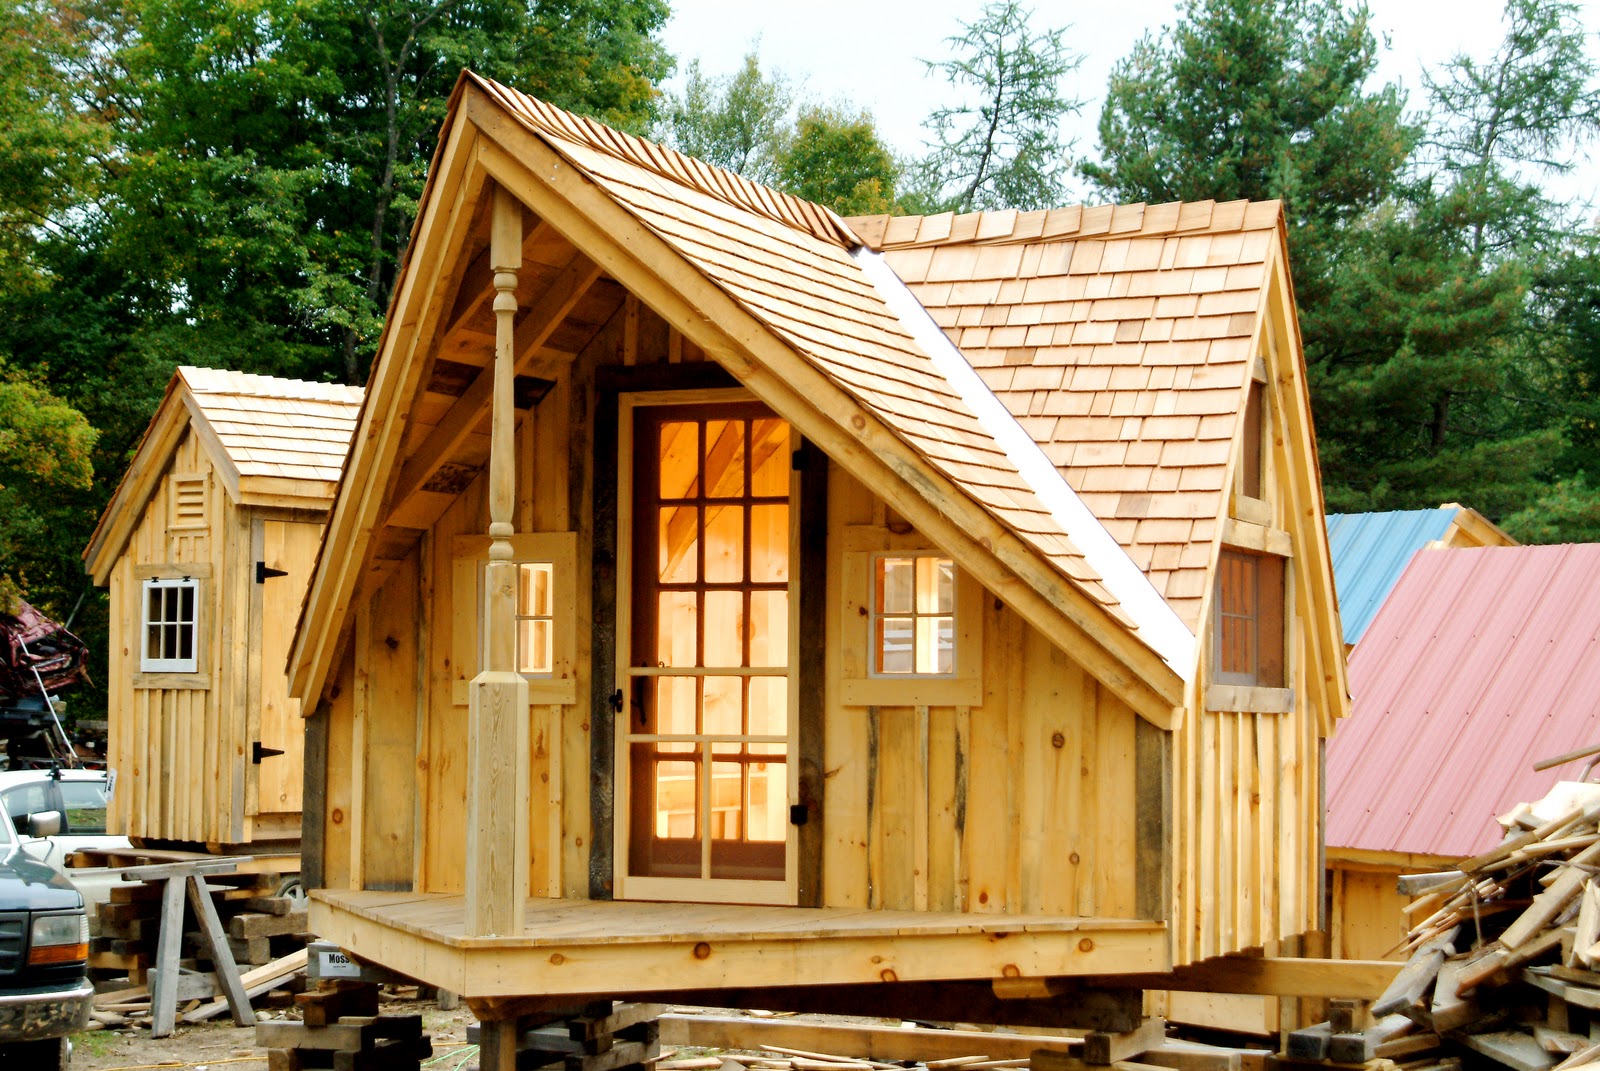 wood sheds plans free